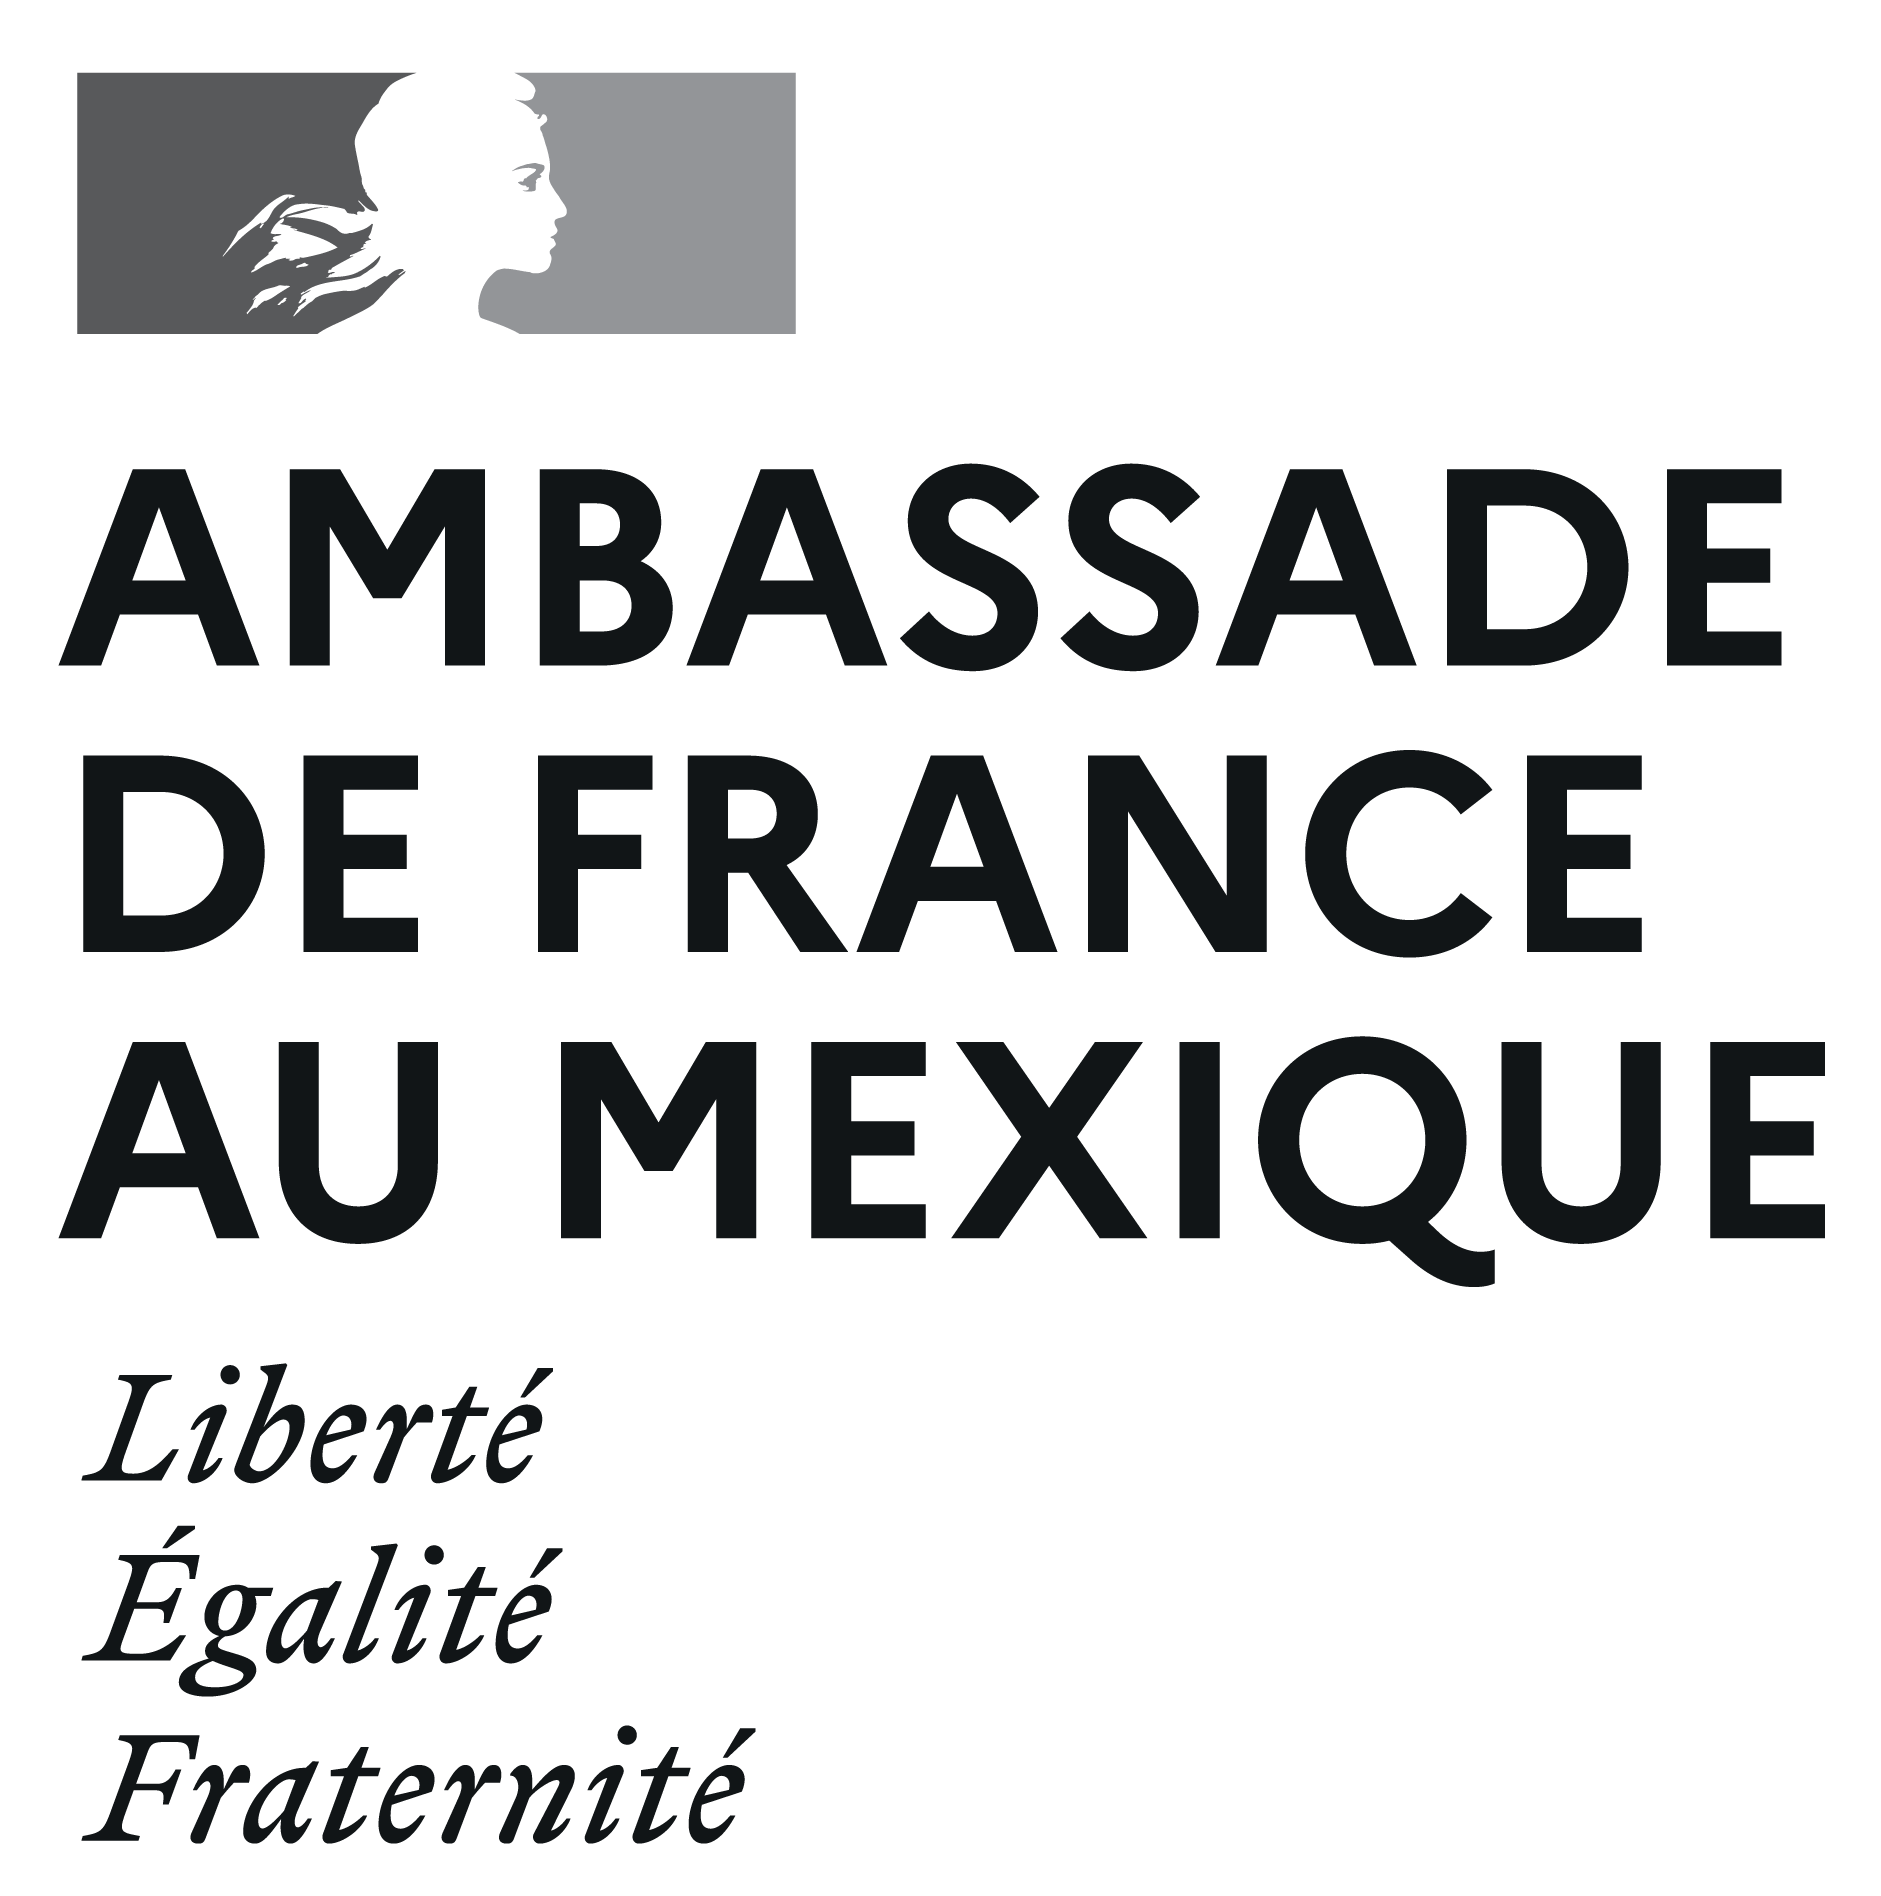 Embajada de Francia en México